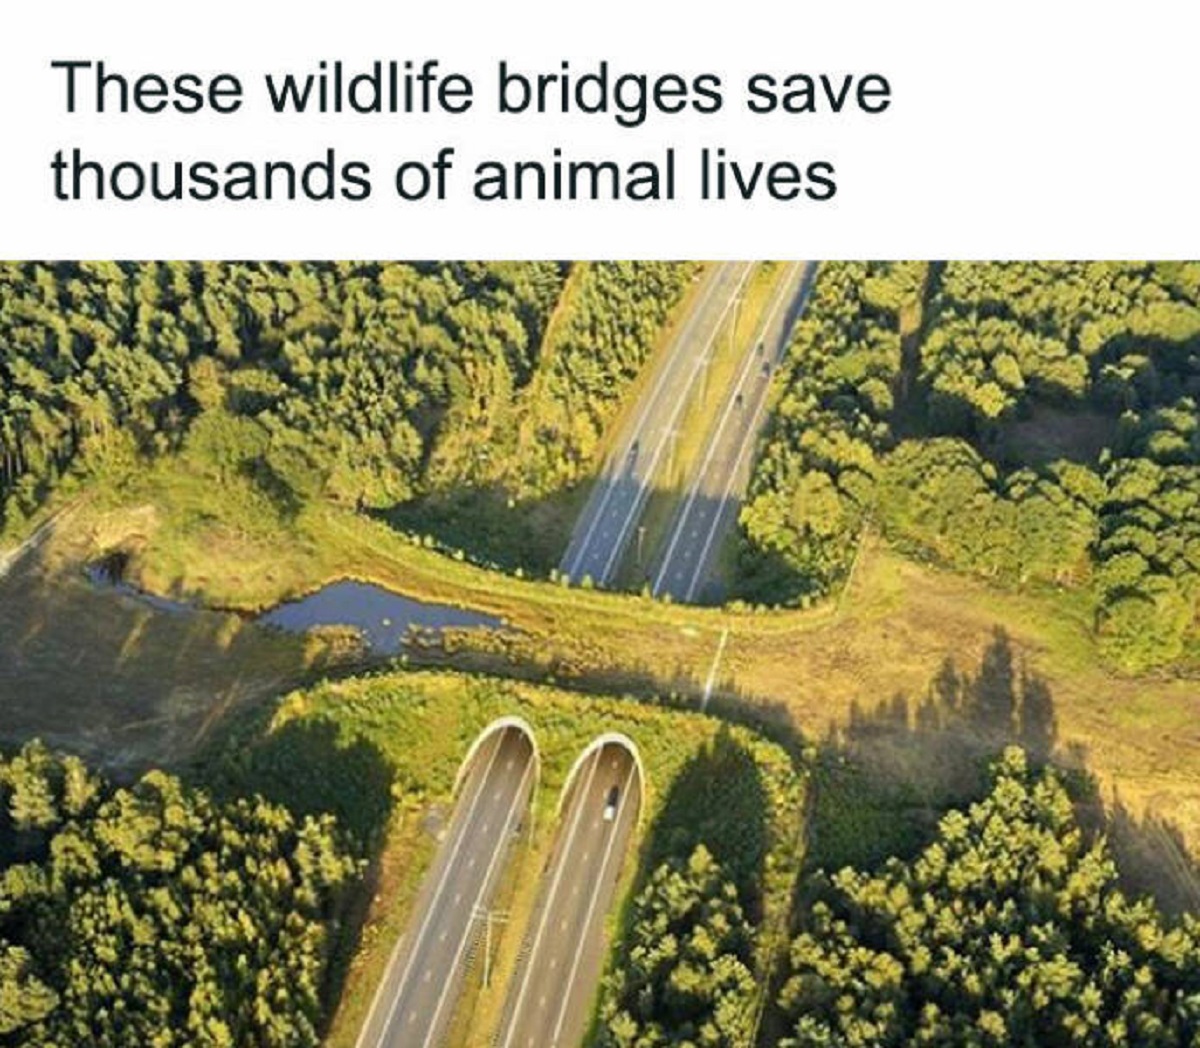 animal bridge in india - These wildlife bridges save thousands of animal lives